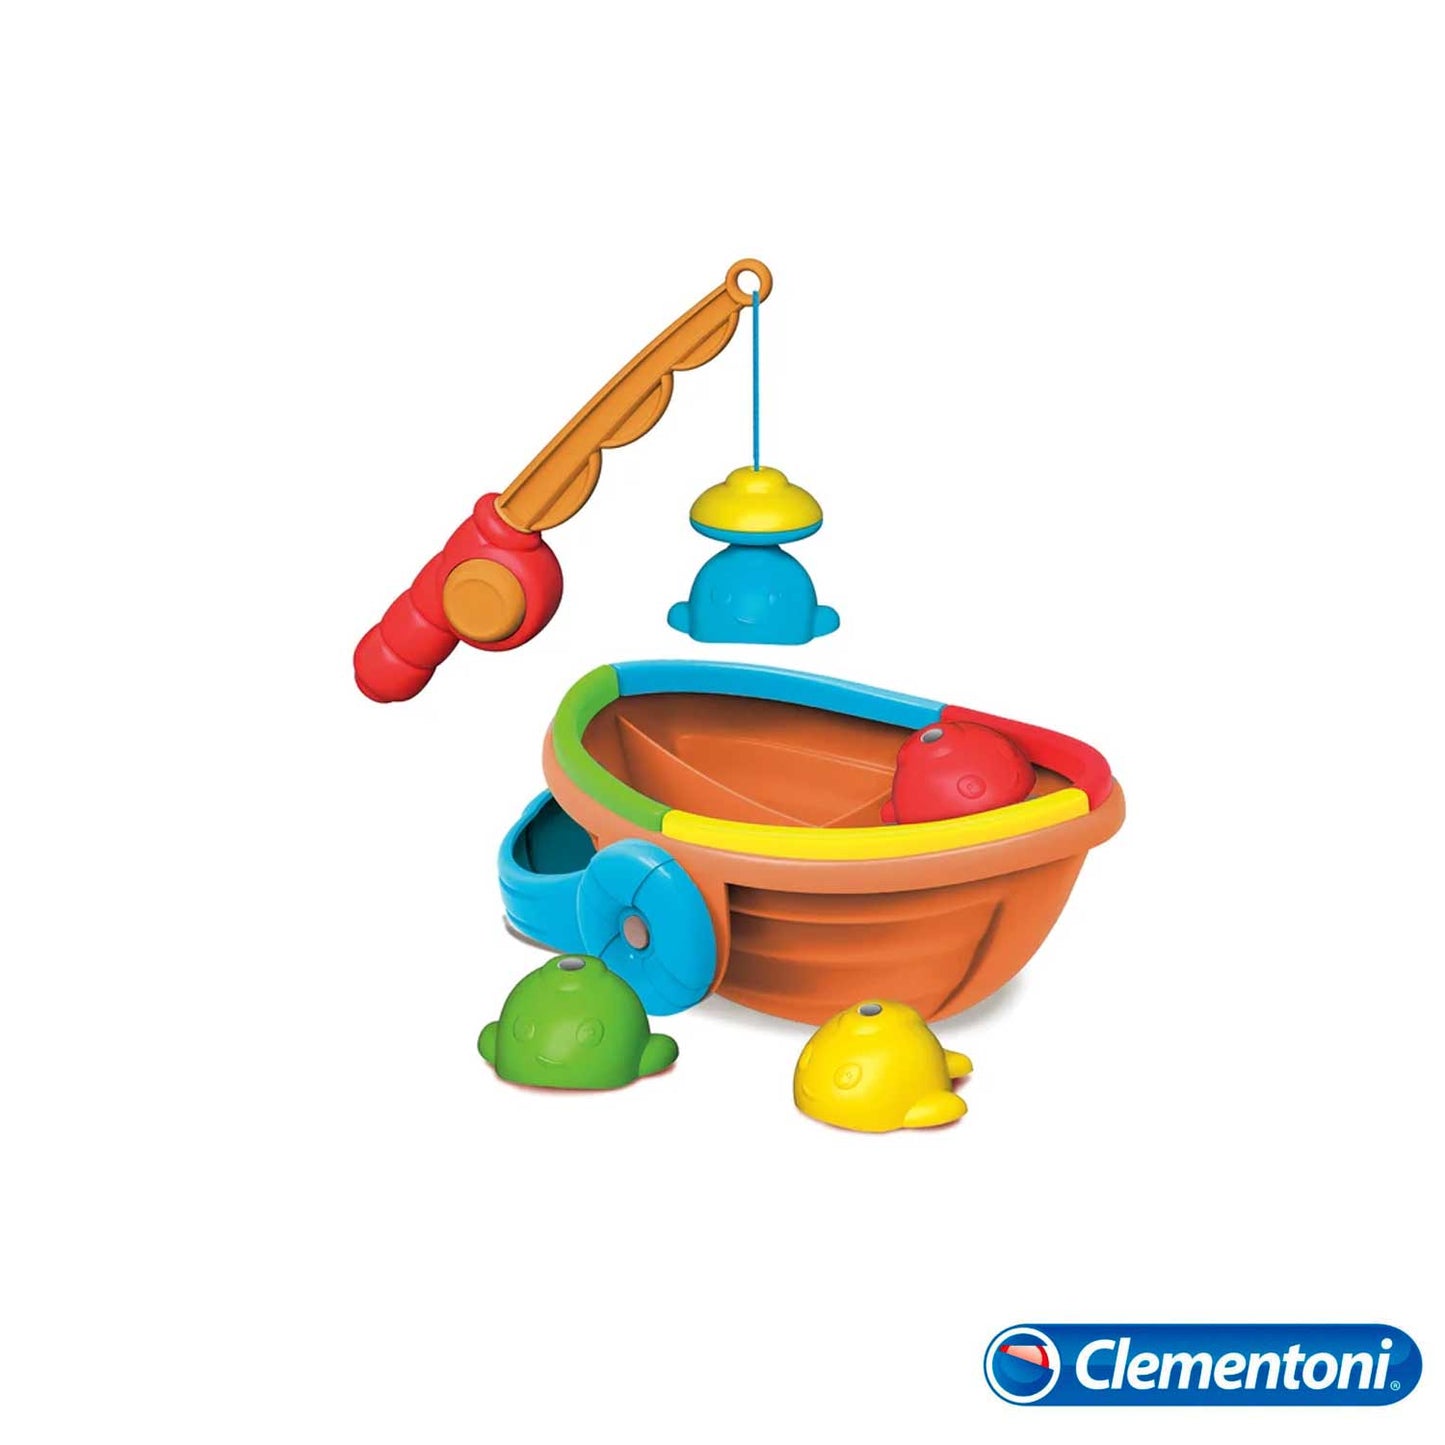 Clementoni - Baby Fishing Set 17688